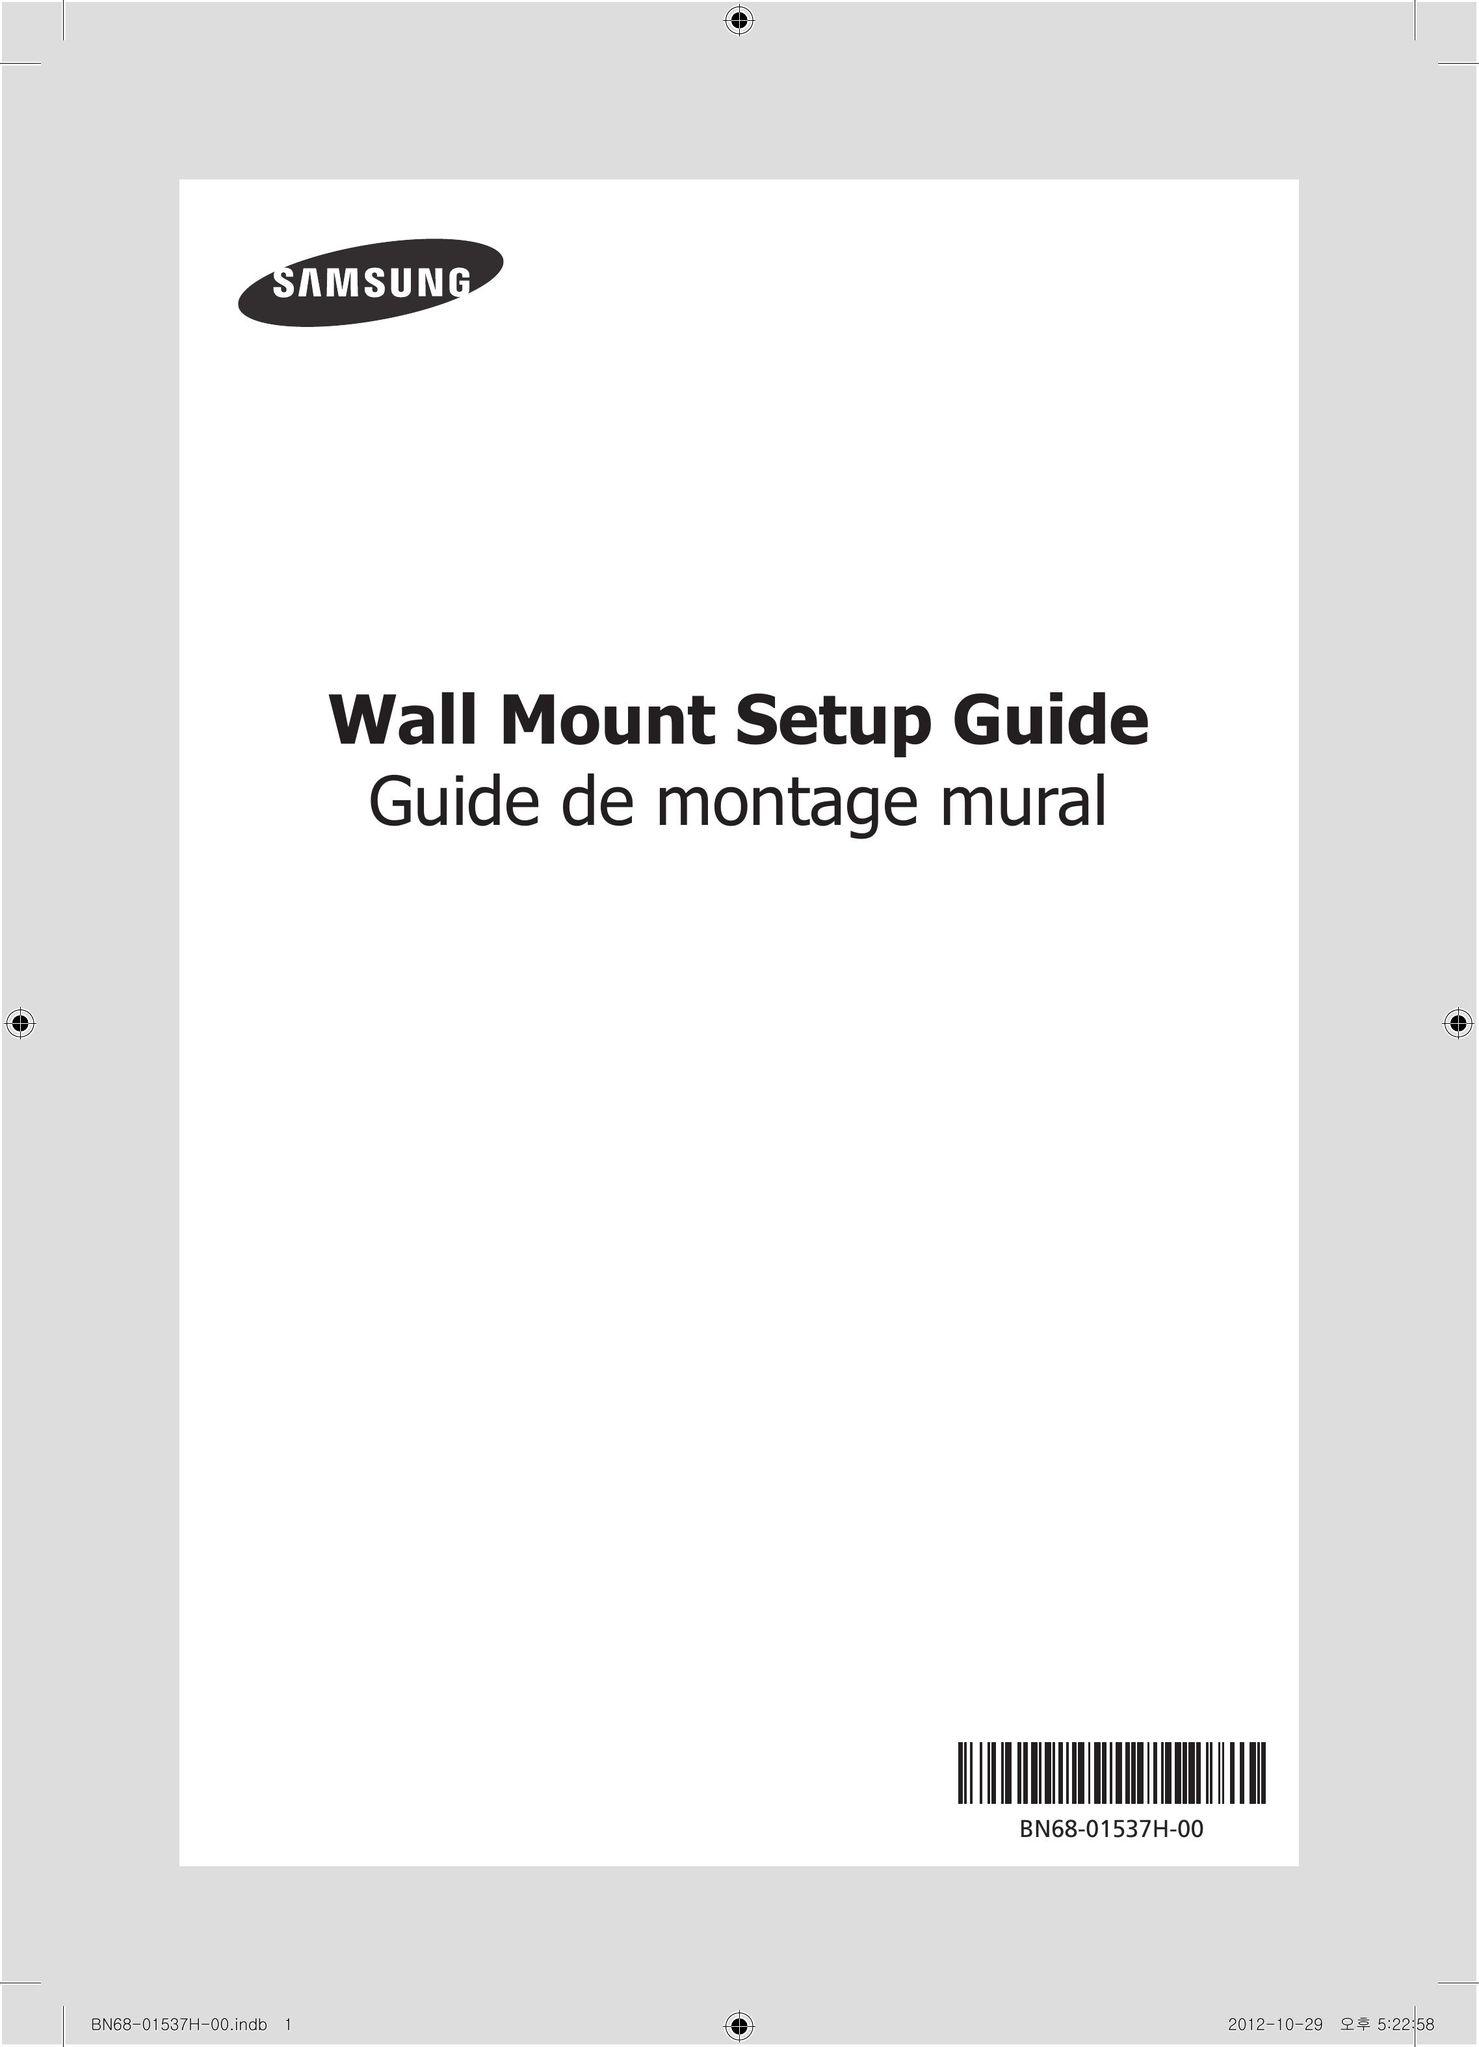 Samsung WMN4675MD TV Mount User Manual